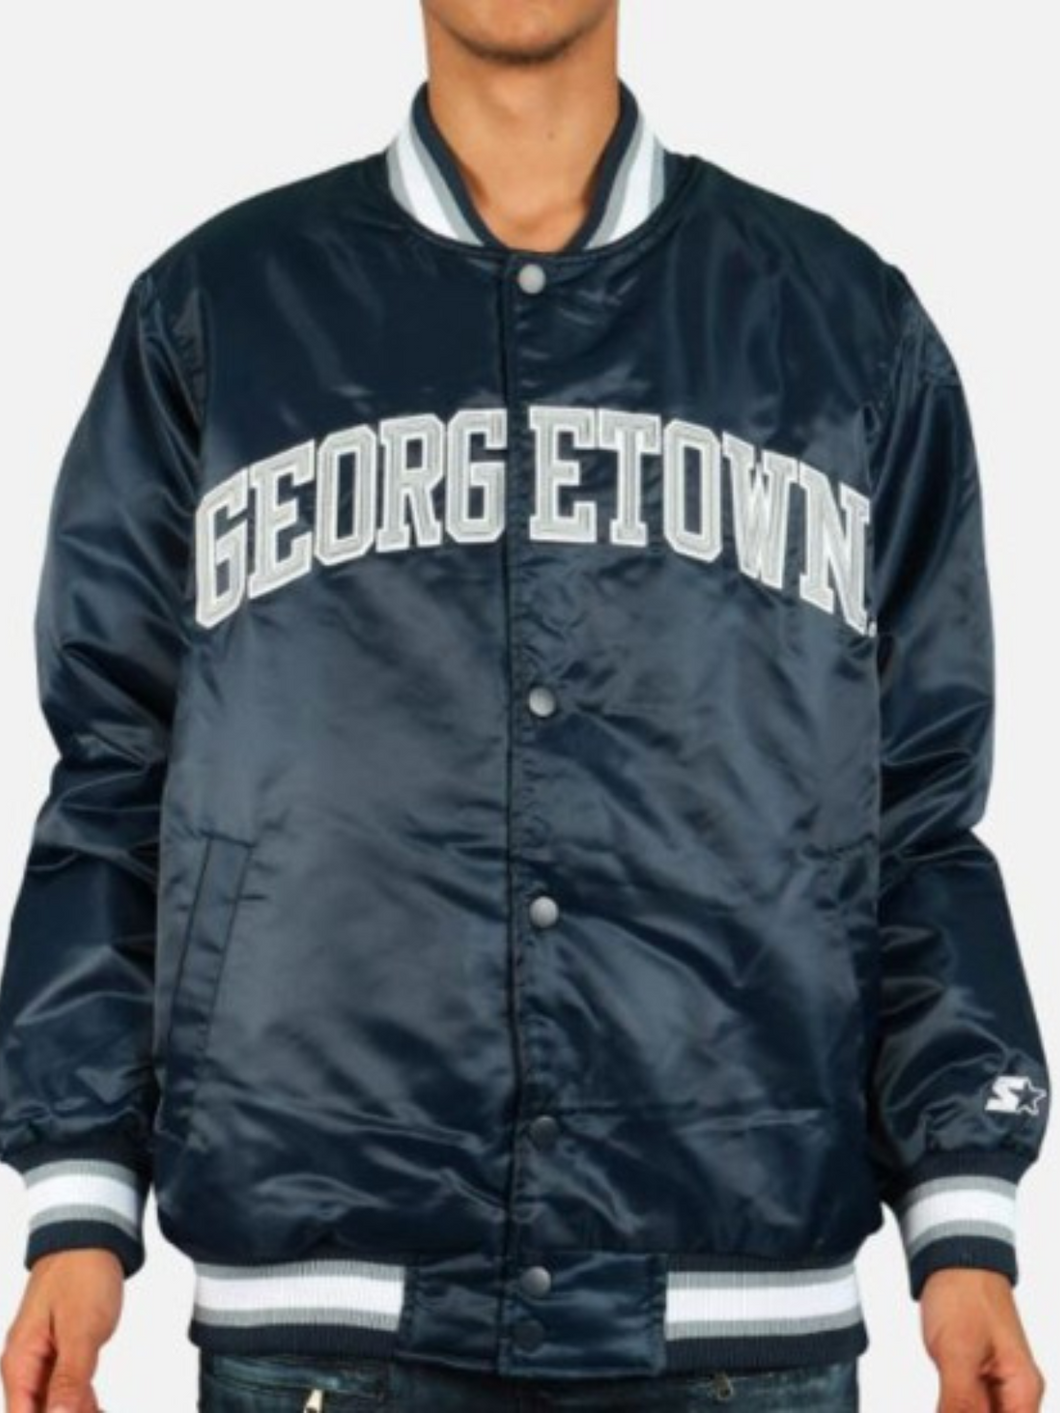 Men’s Blue Georgetown Bomber Jacket